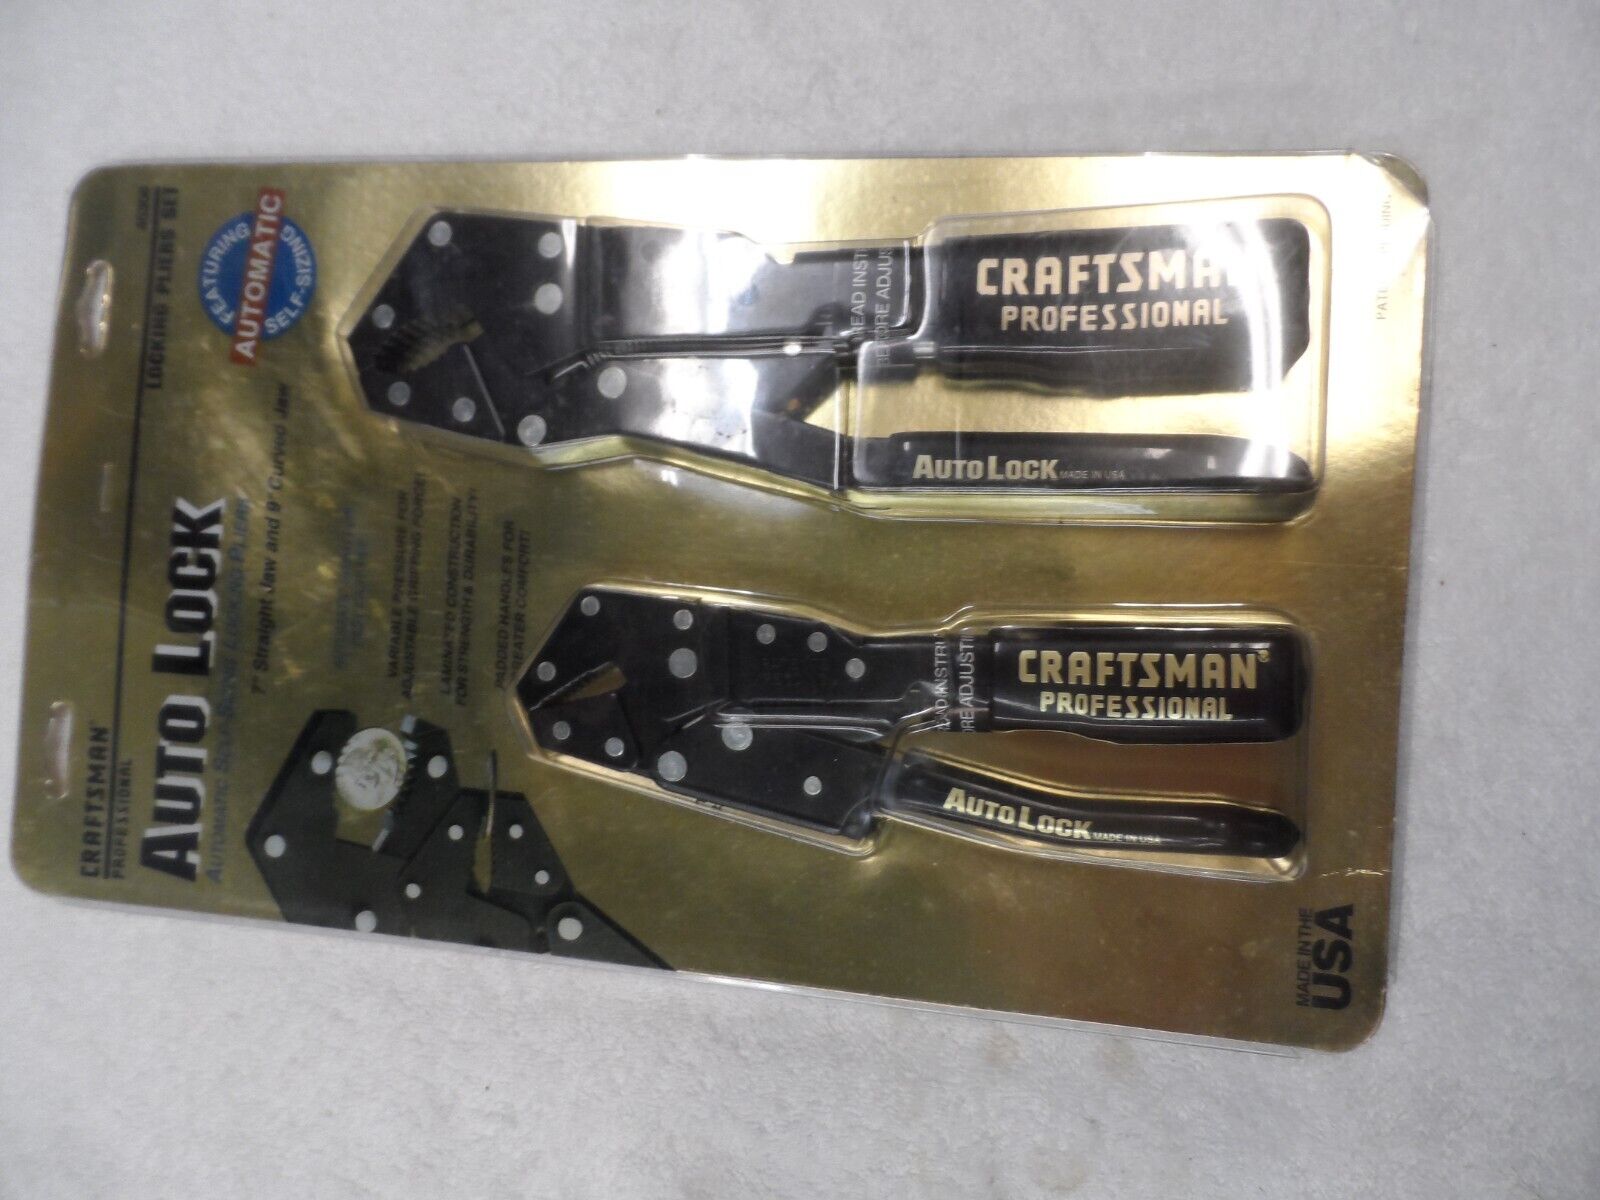 Craftsman Professional Auto Locking Pliers 7